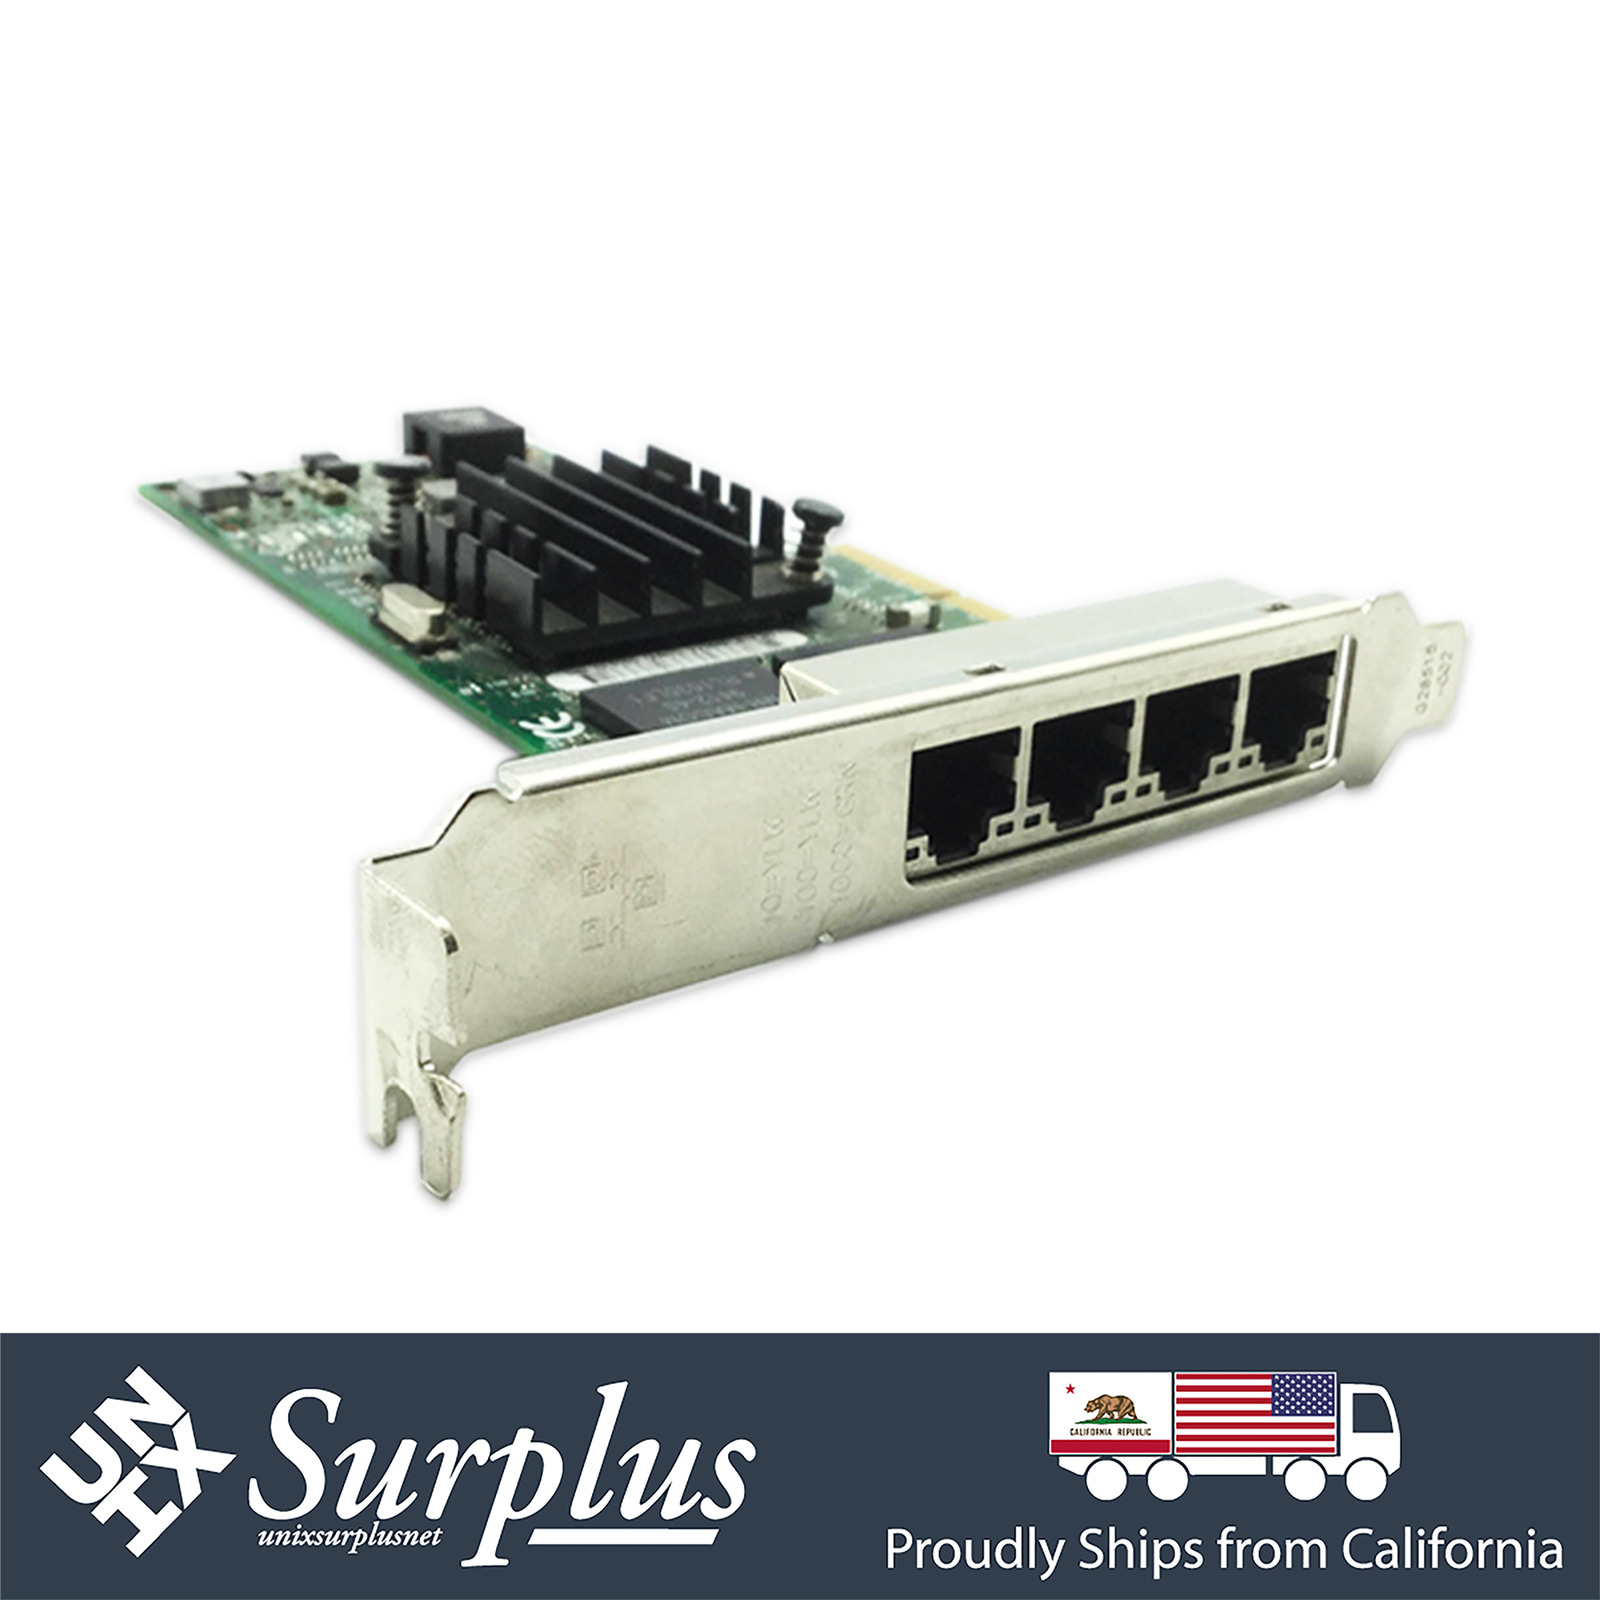 Intel OEM I340-T4 Quad Port Gigabit NIC RJ45 PCIe Ethernet Adapter High Profile